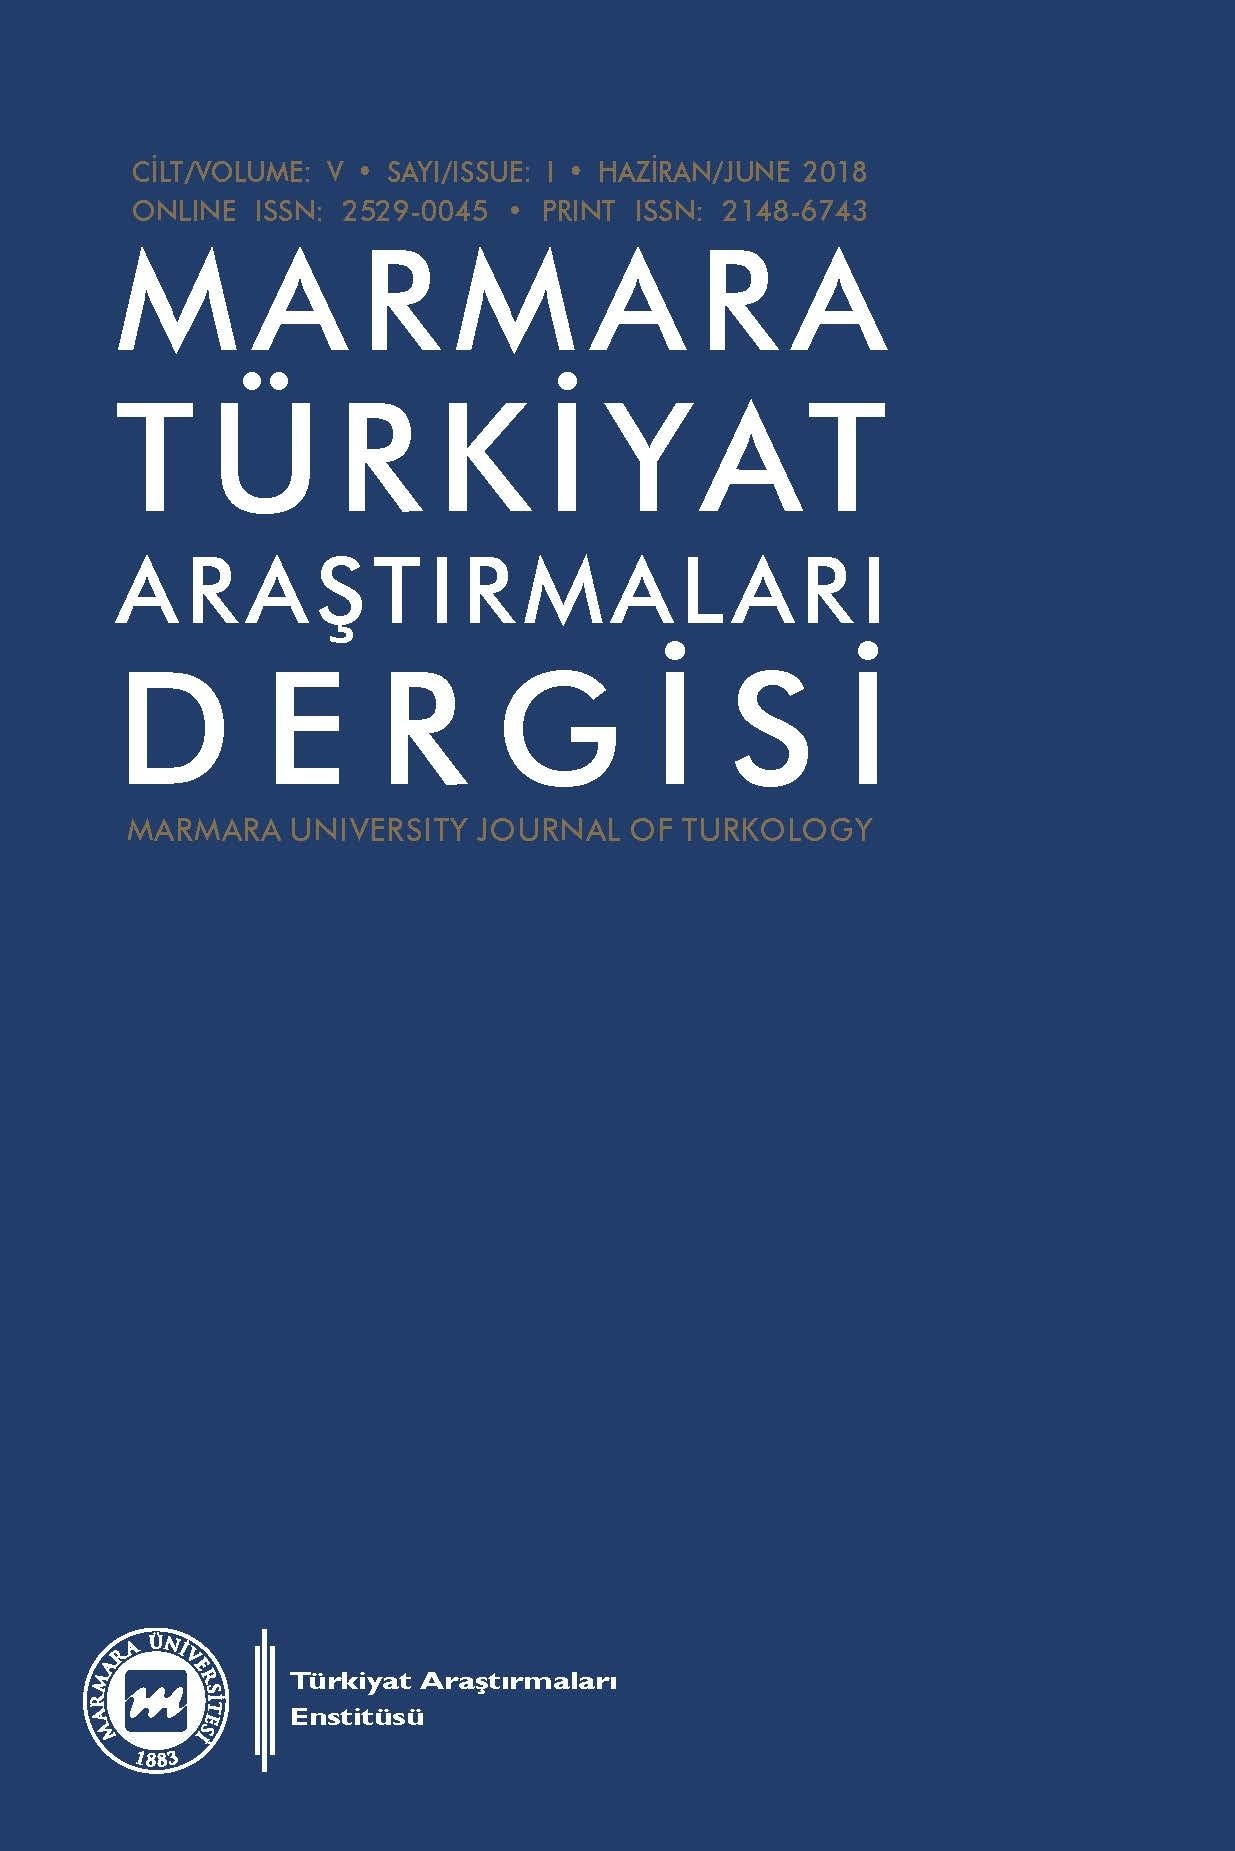 Marmara University Journal of Turkology